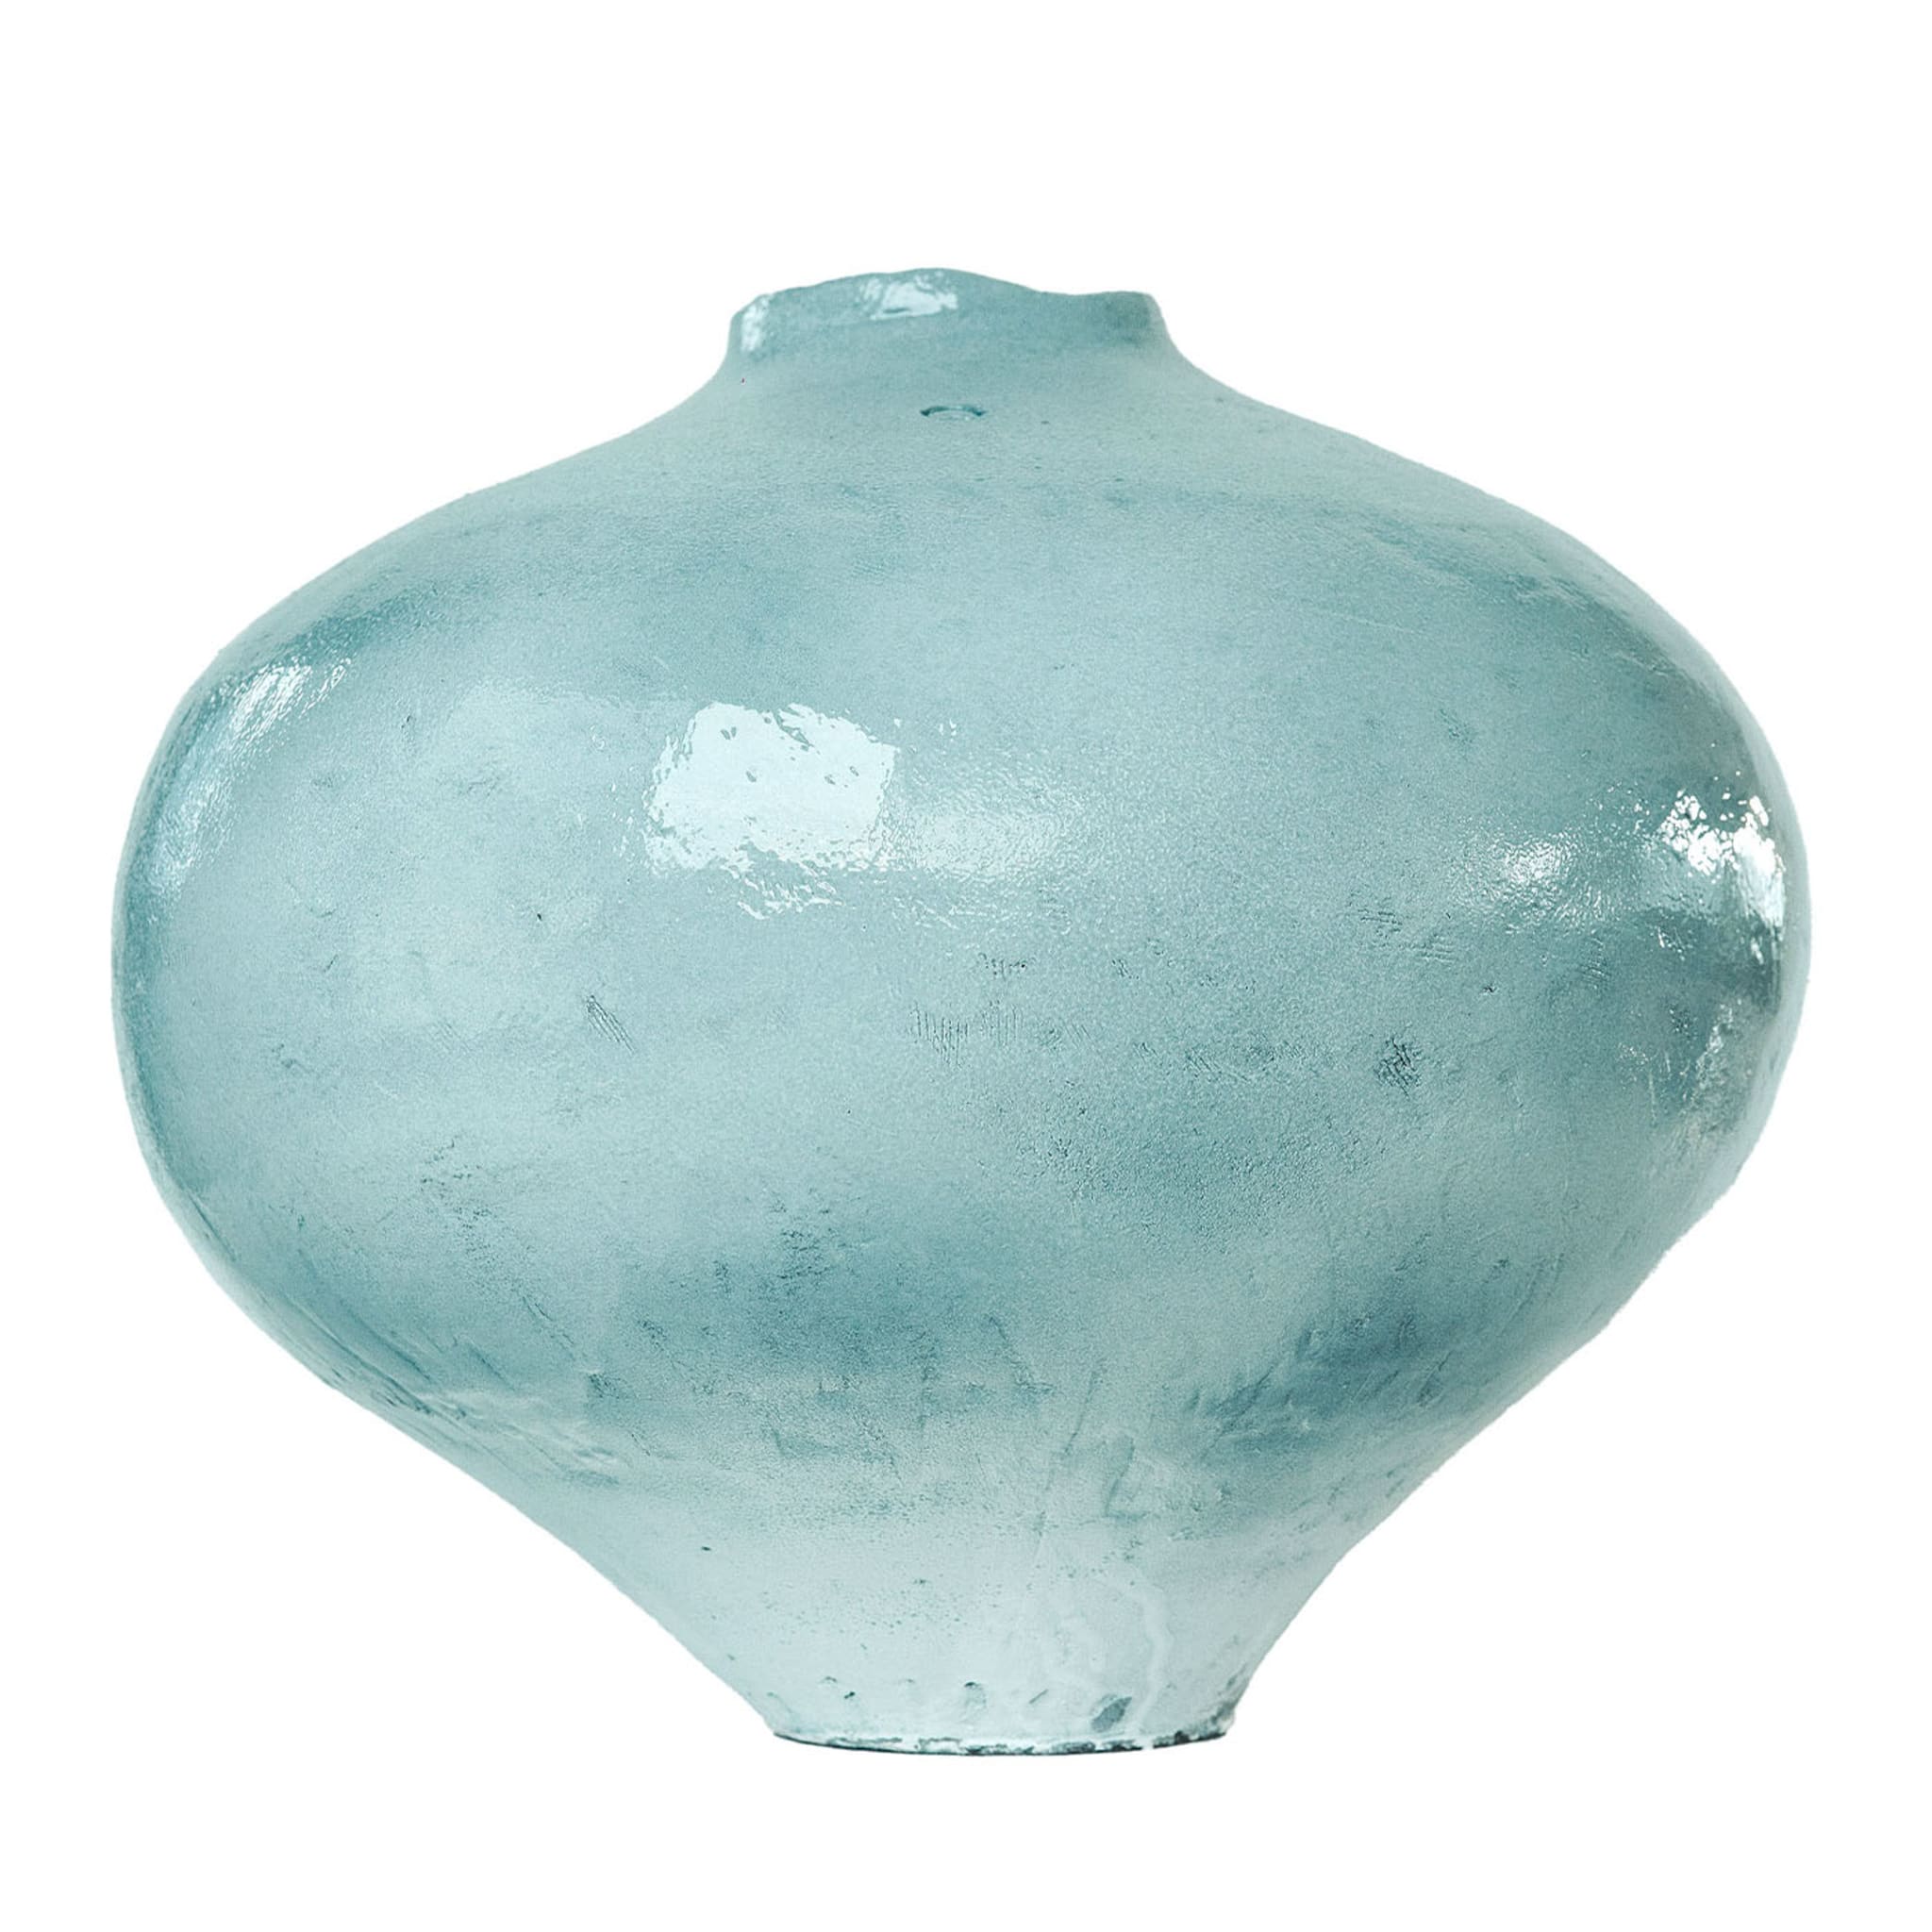 London Himmelblau Vase - Hauptansicht